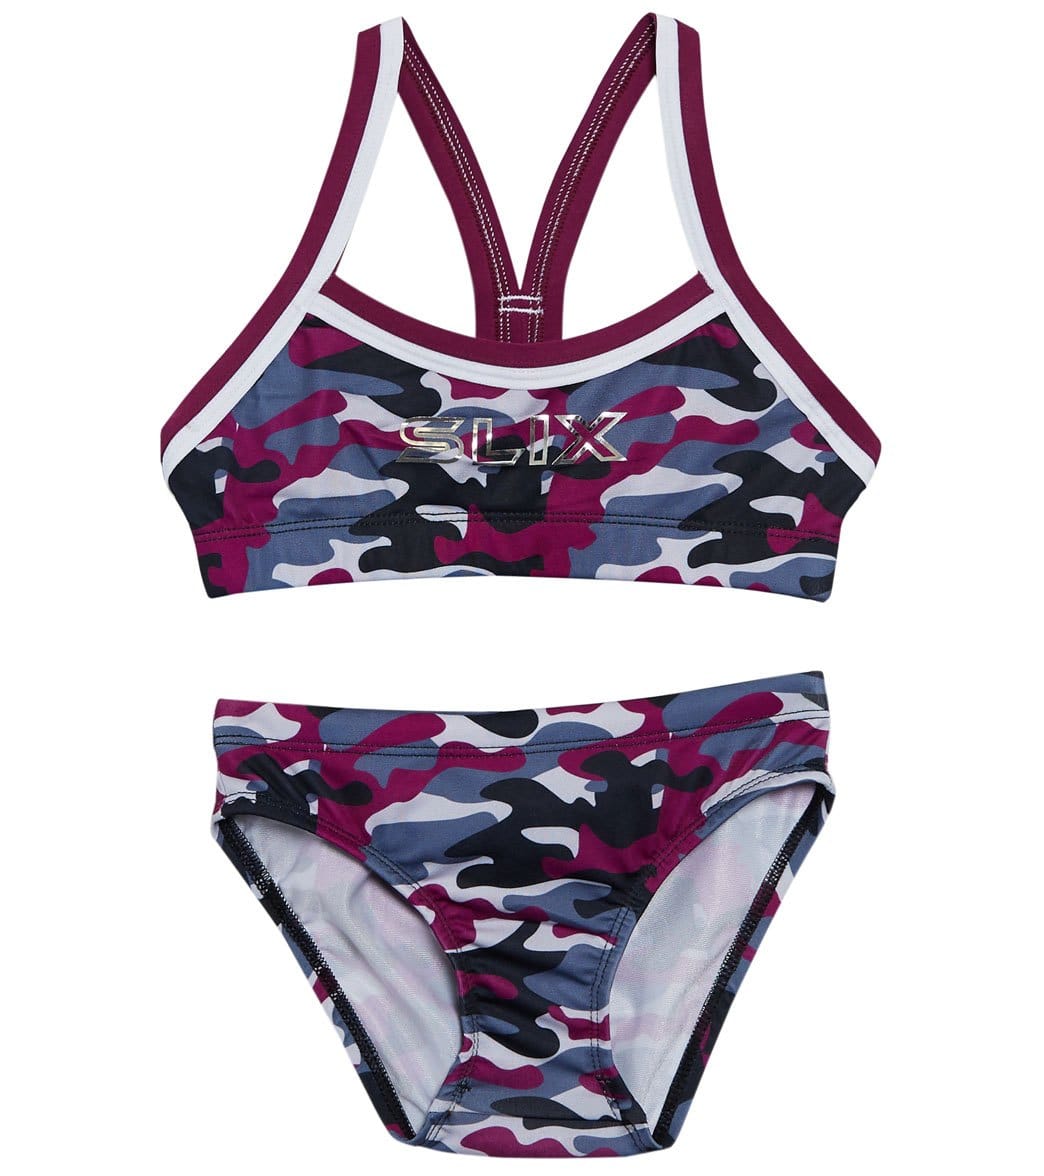 Slix Australia Girls' Berry Camo Training Bikini Set at SwimOutlet.com